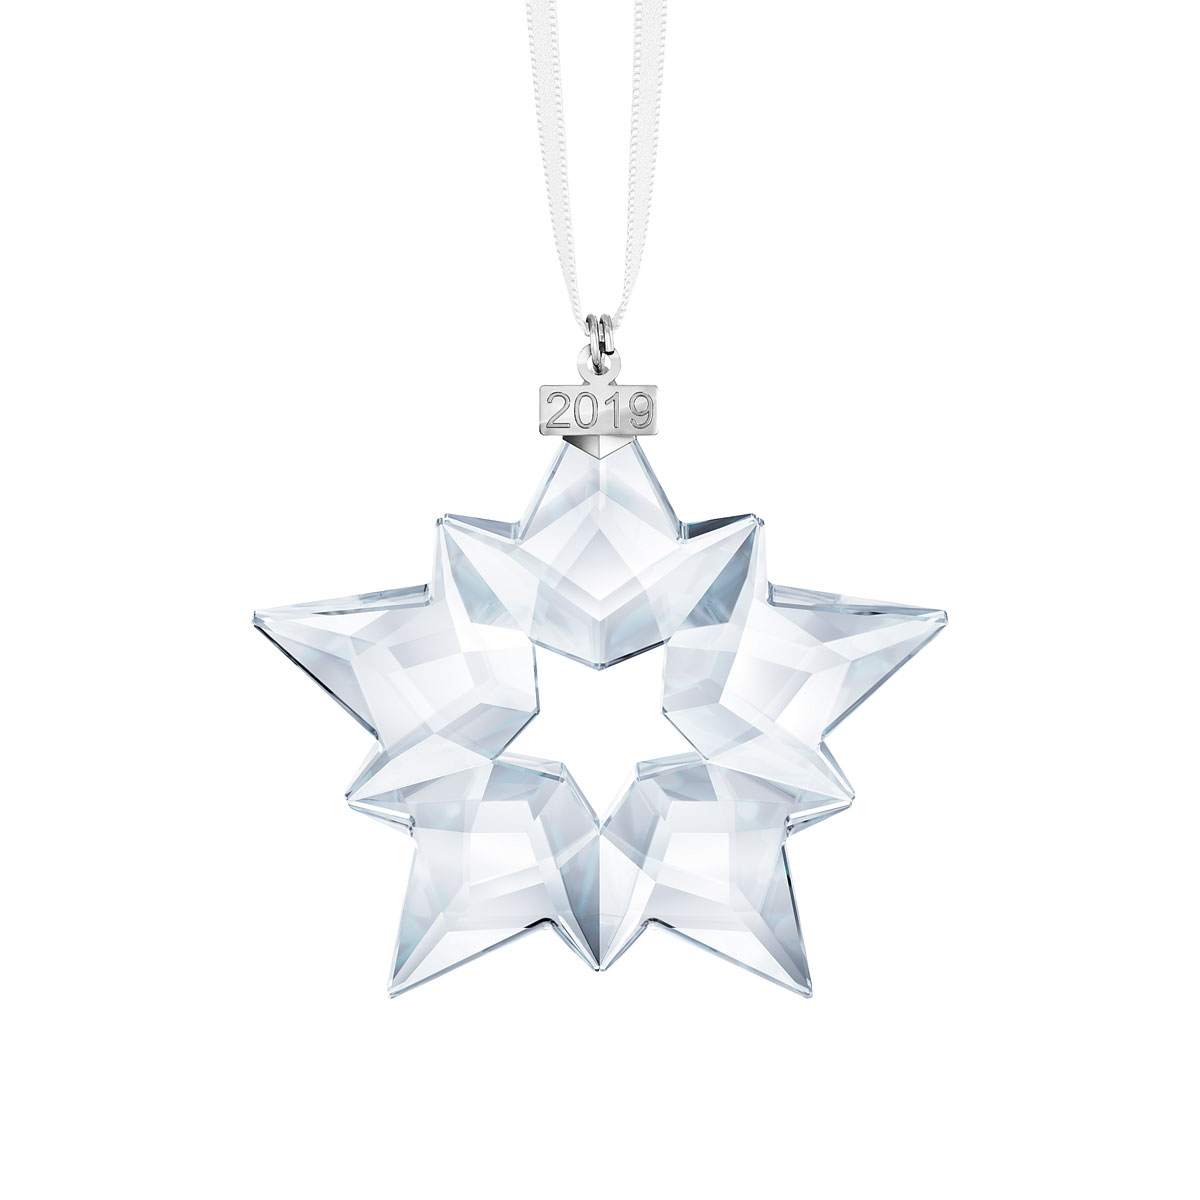 5427990 Crystal Annual Edition 2019 Christmas Ornament Star